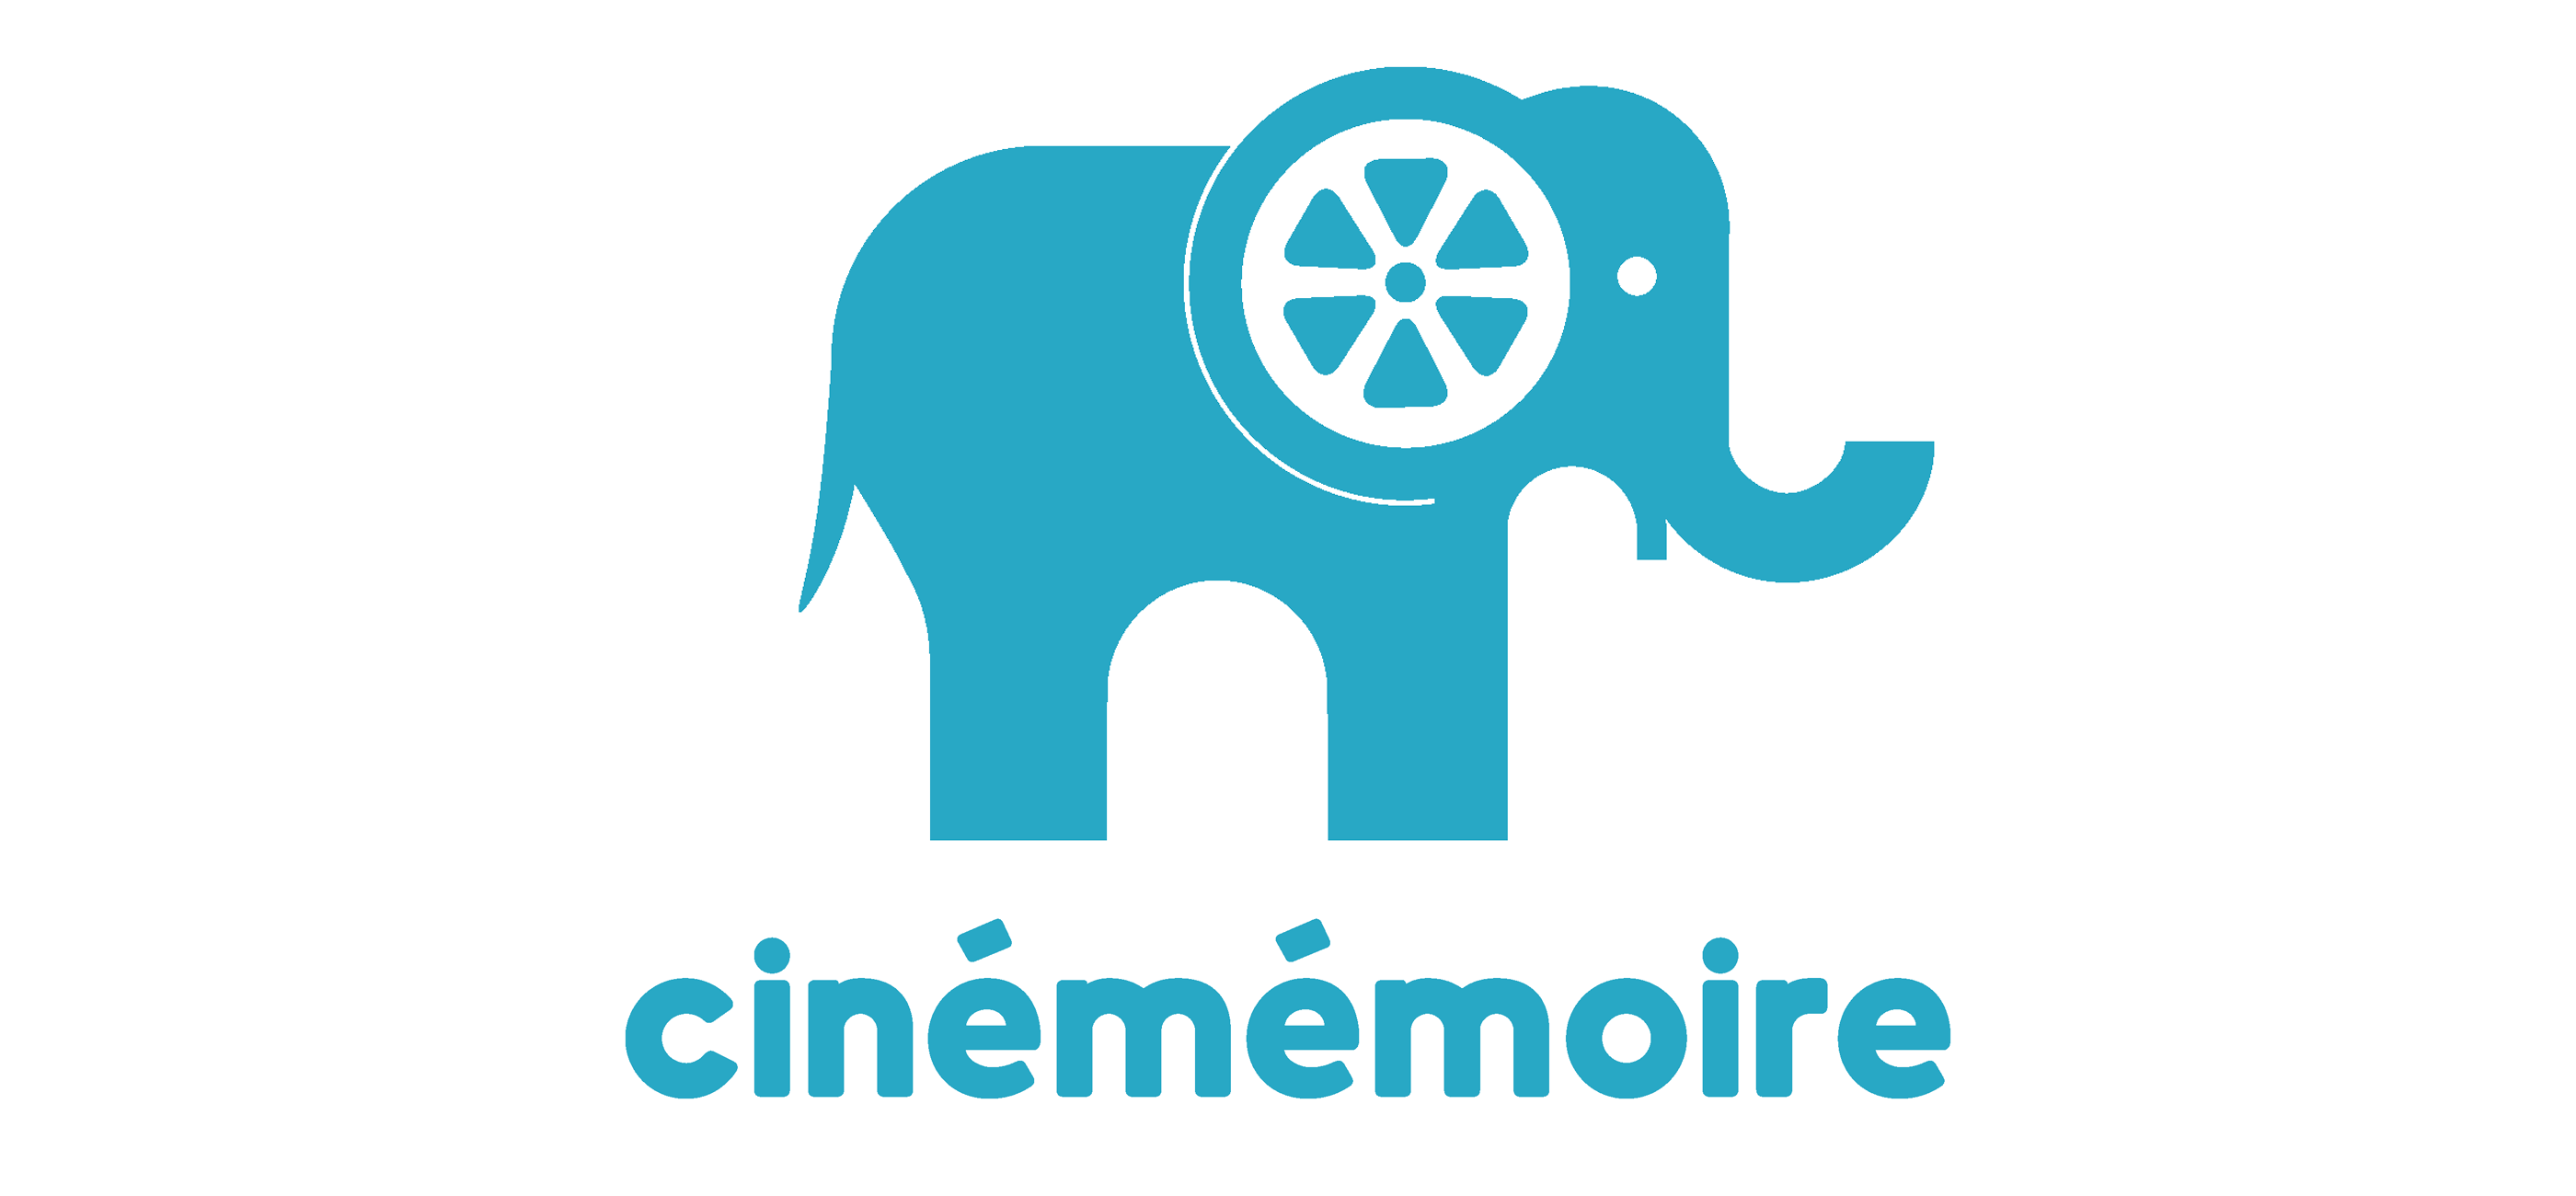 (c) Cinememoire.net